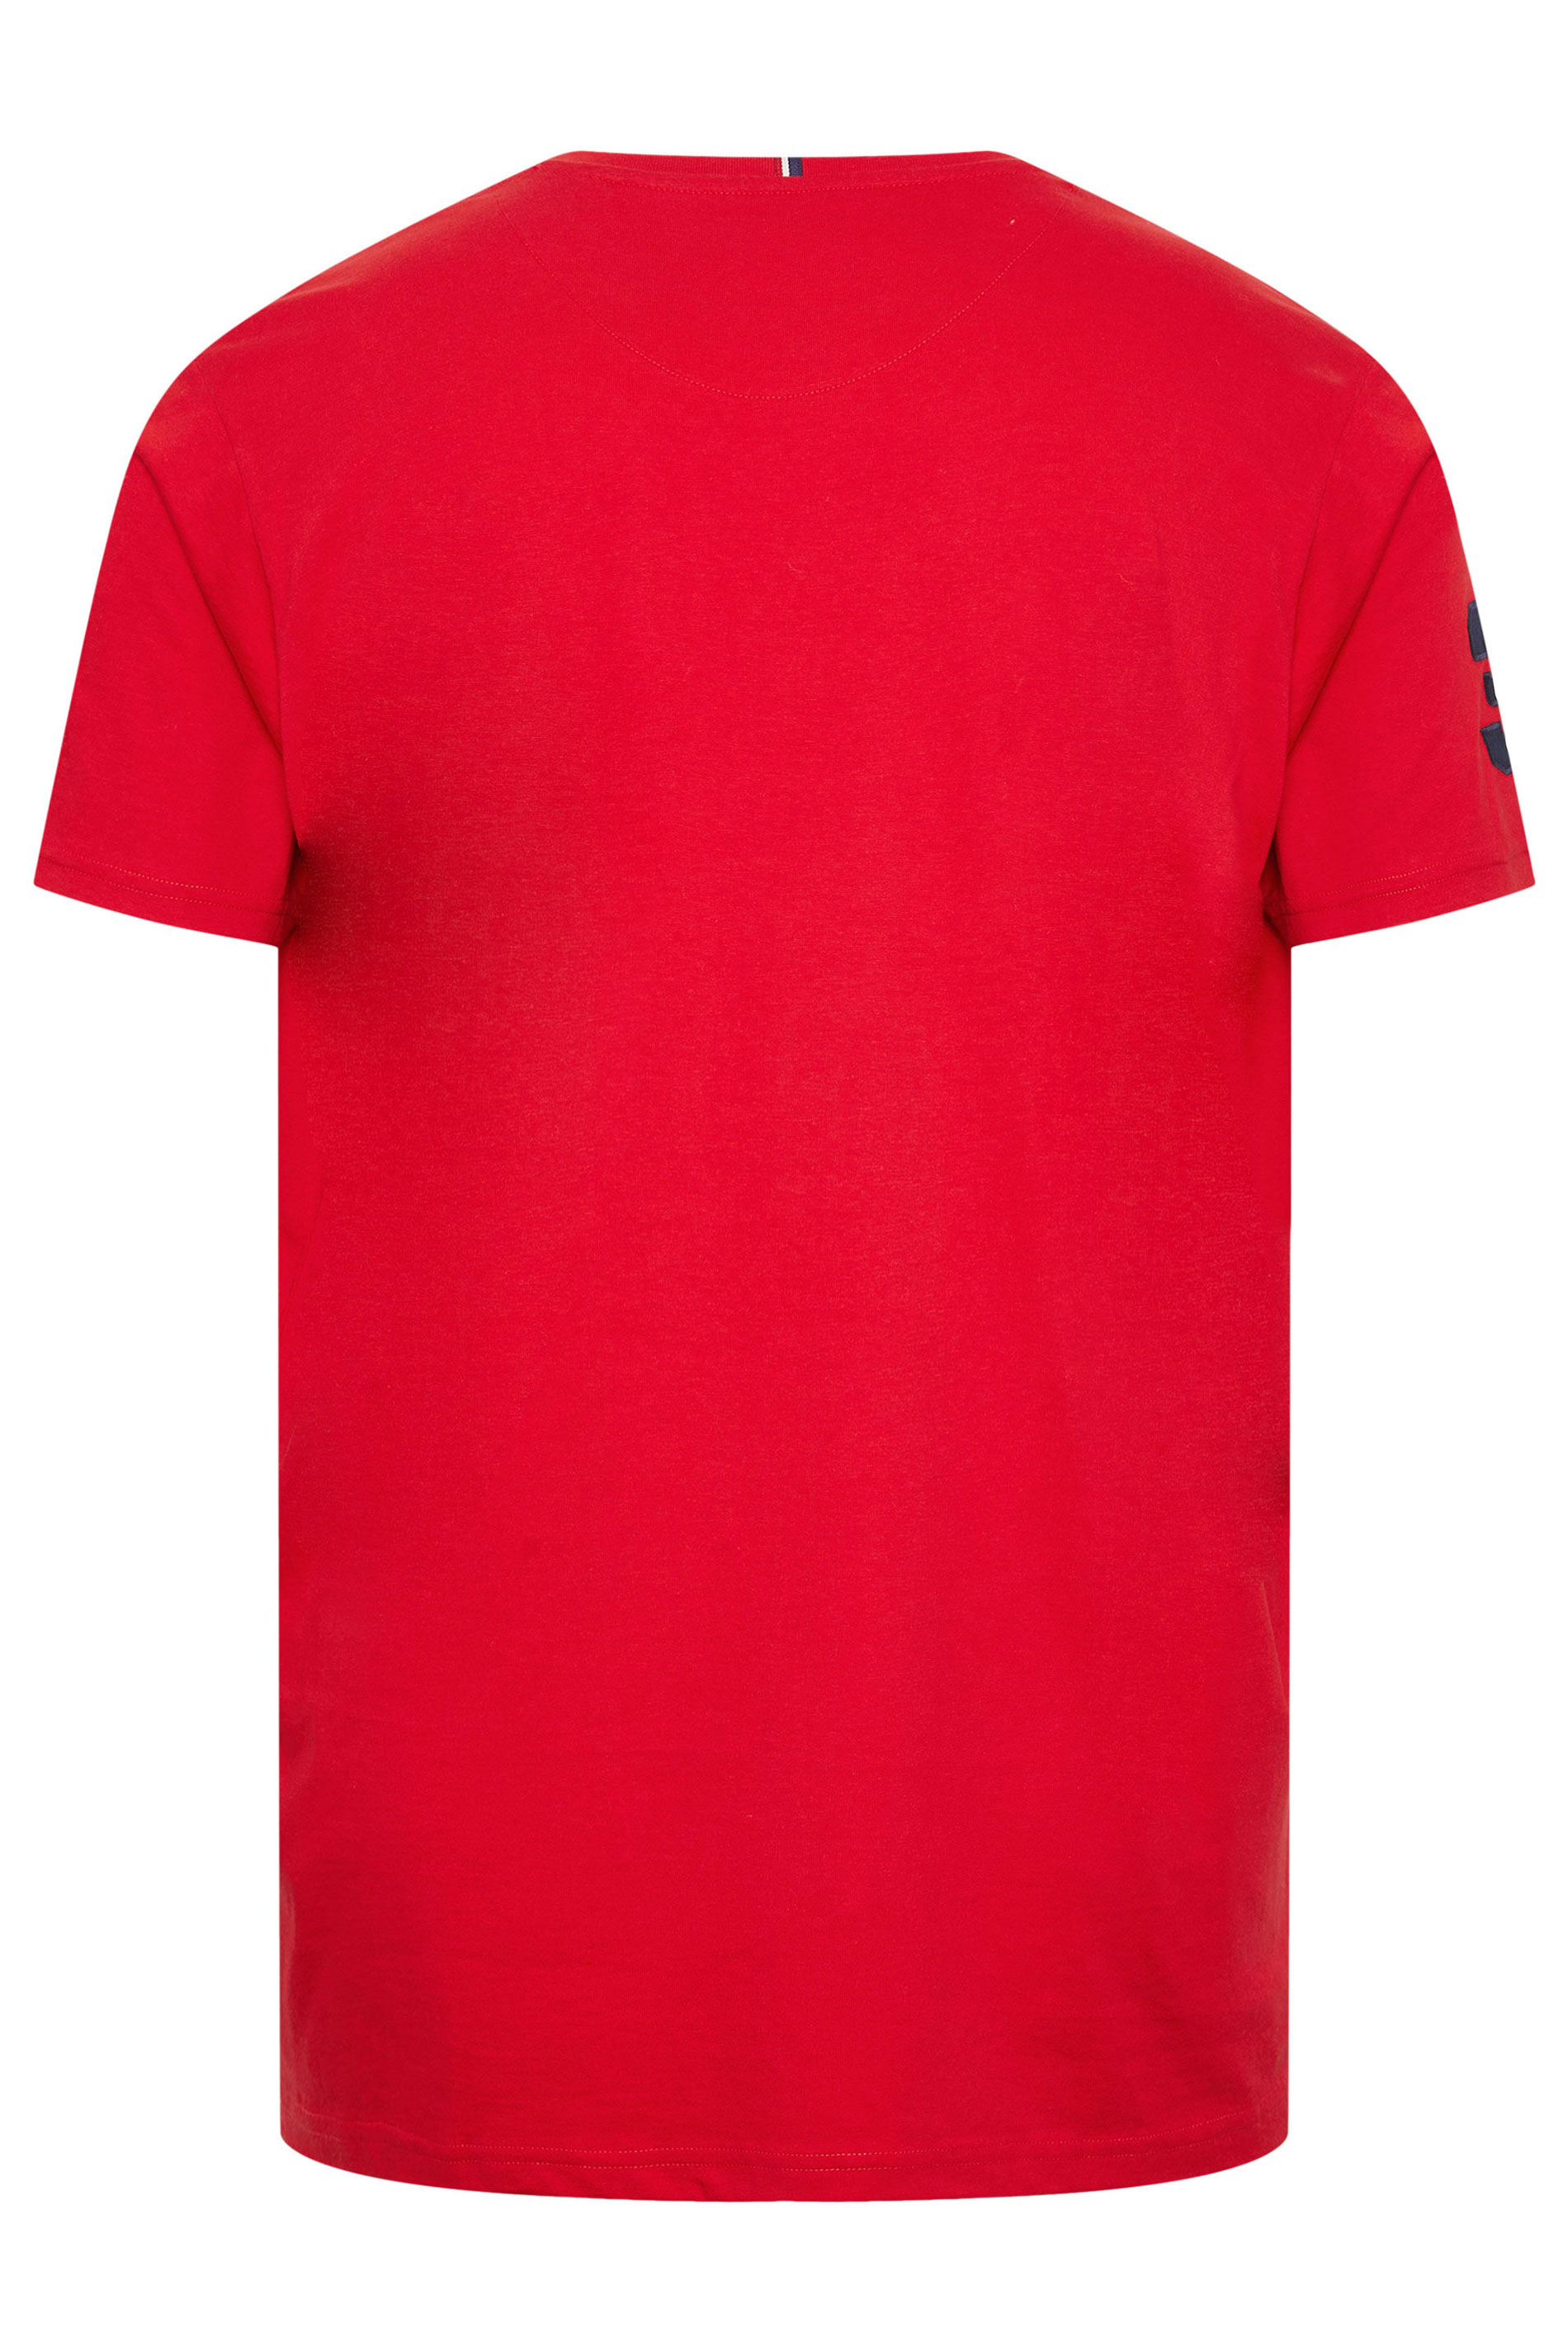 U.S. POLO ASSN. Red 'Player 3' T-Shirt | BadRhino 3